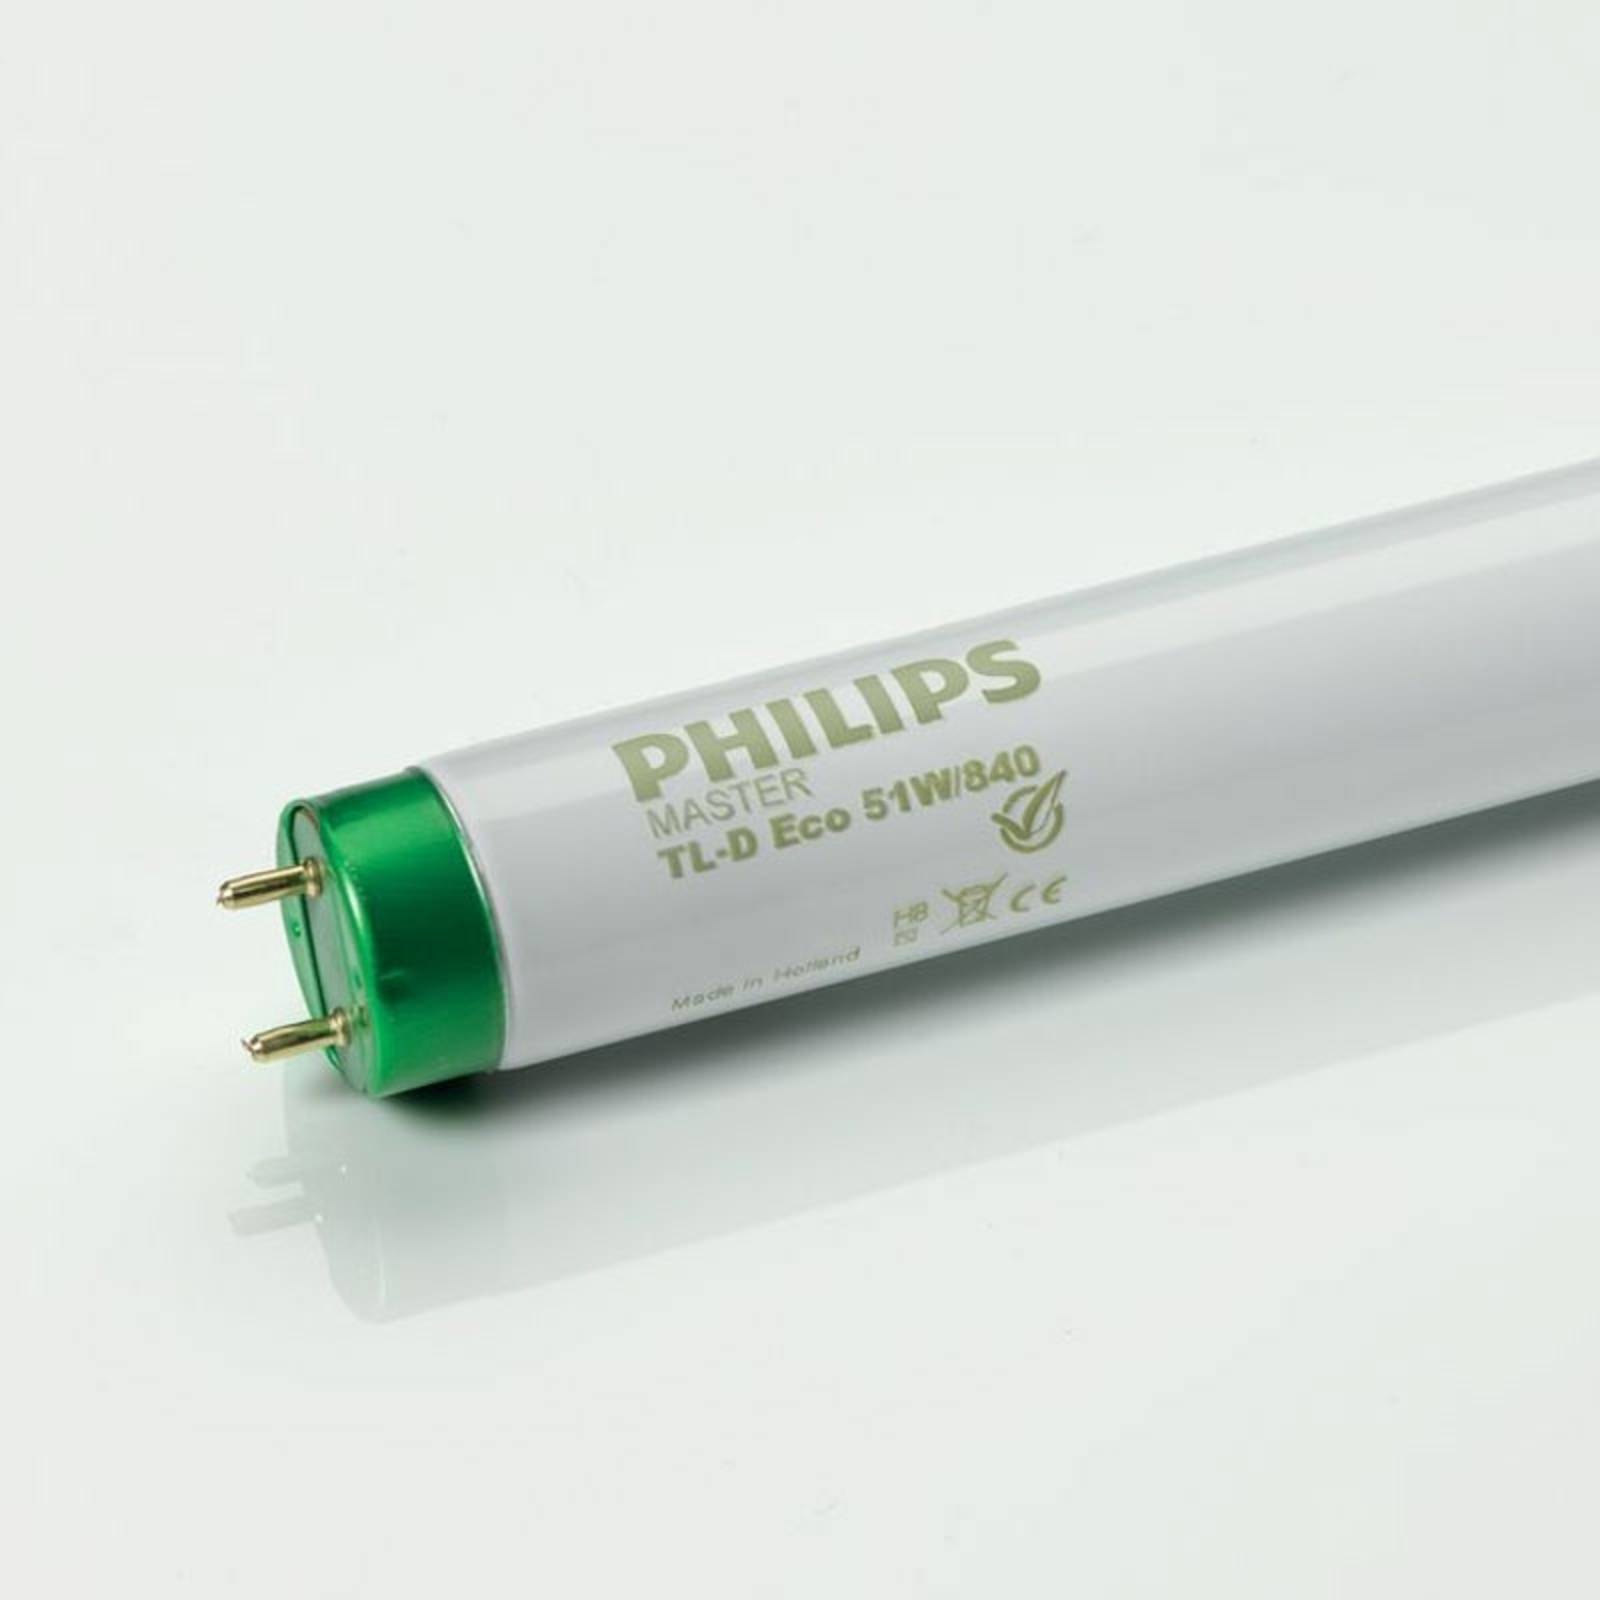 Philips Zářivka G13 T8 Master TL-D Eco 840 51W